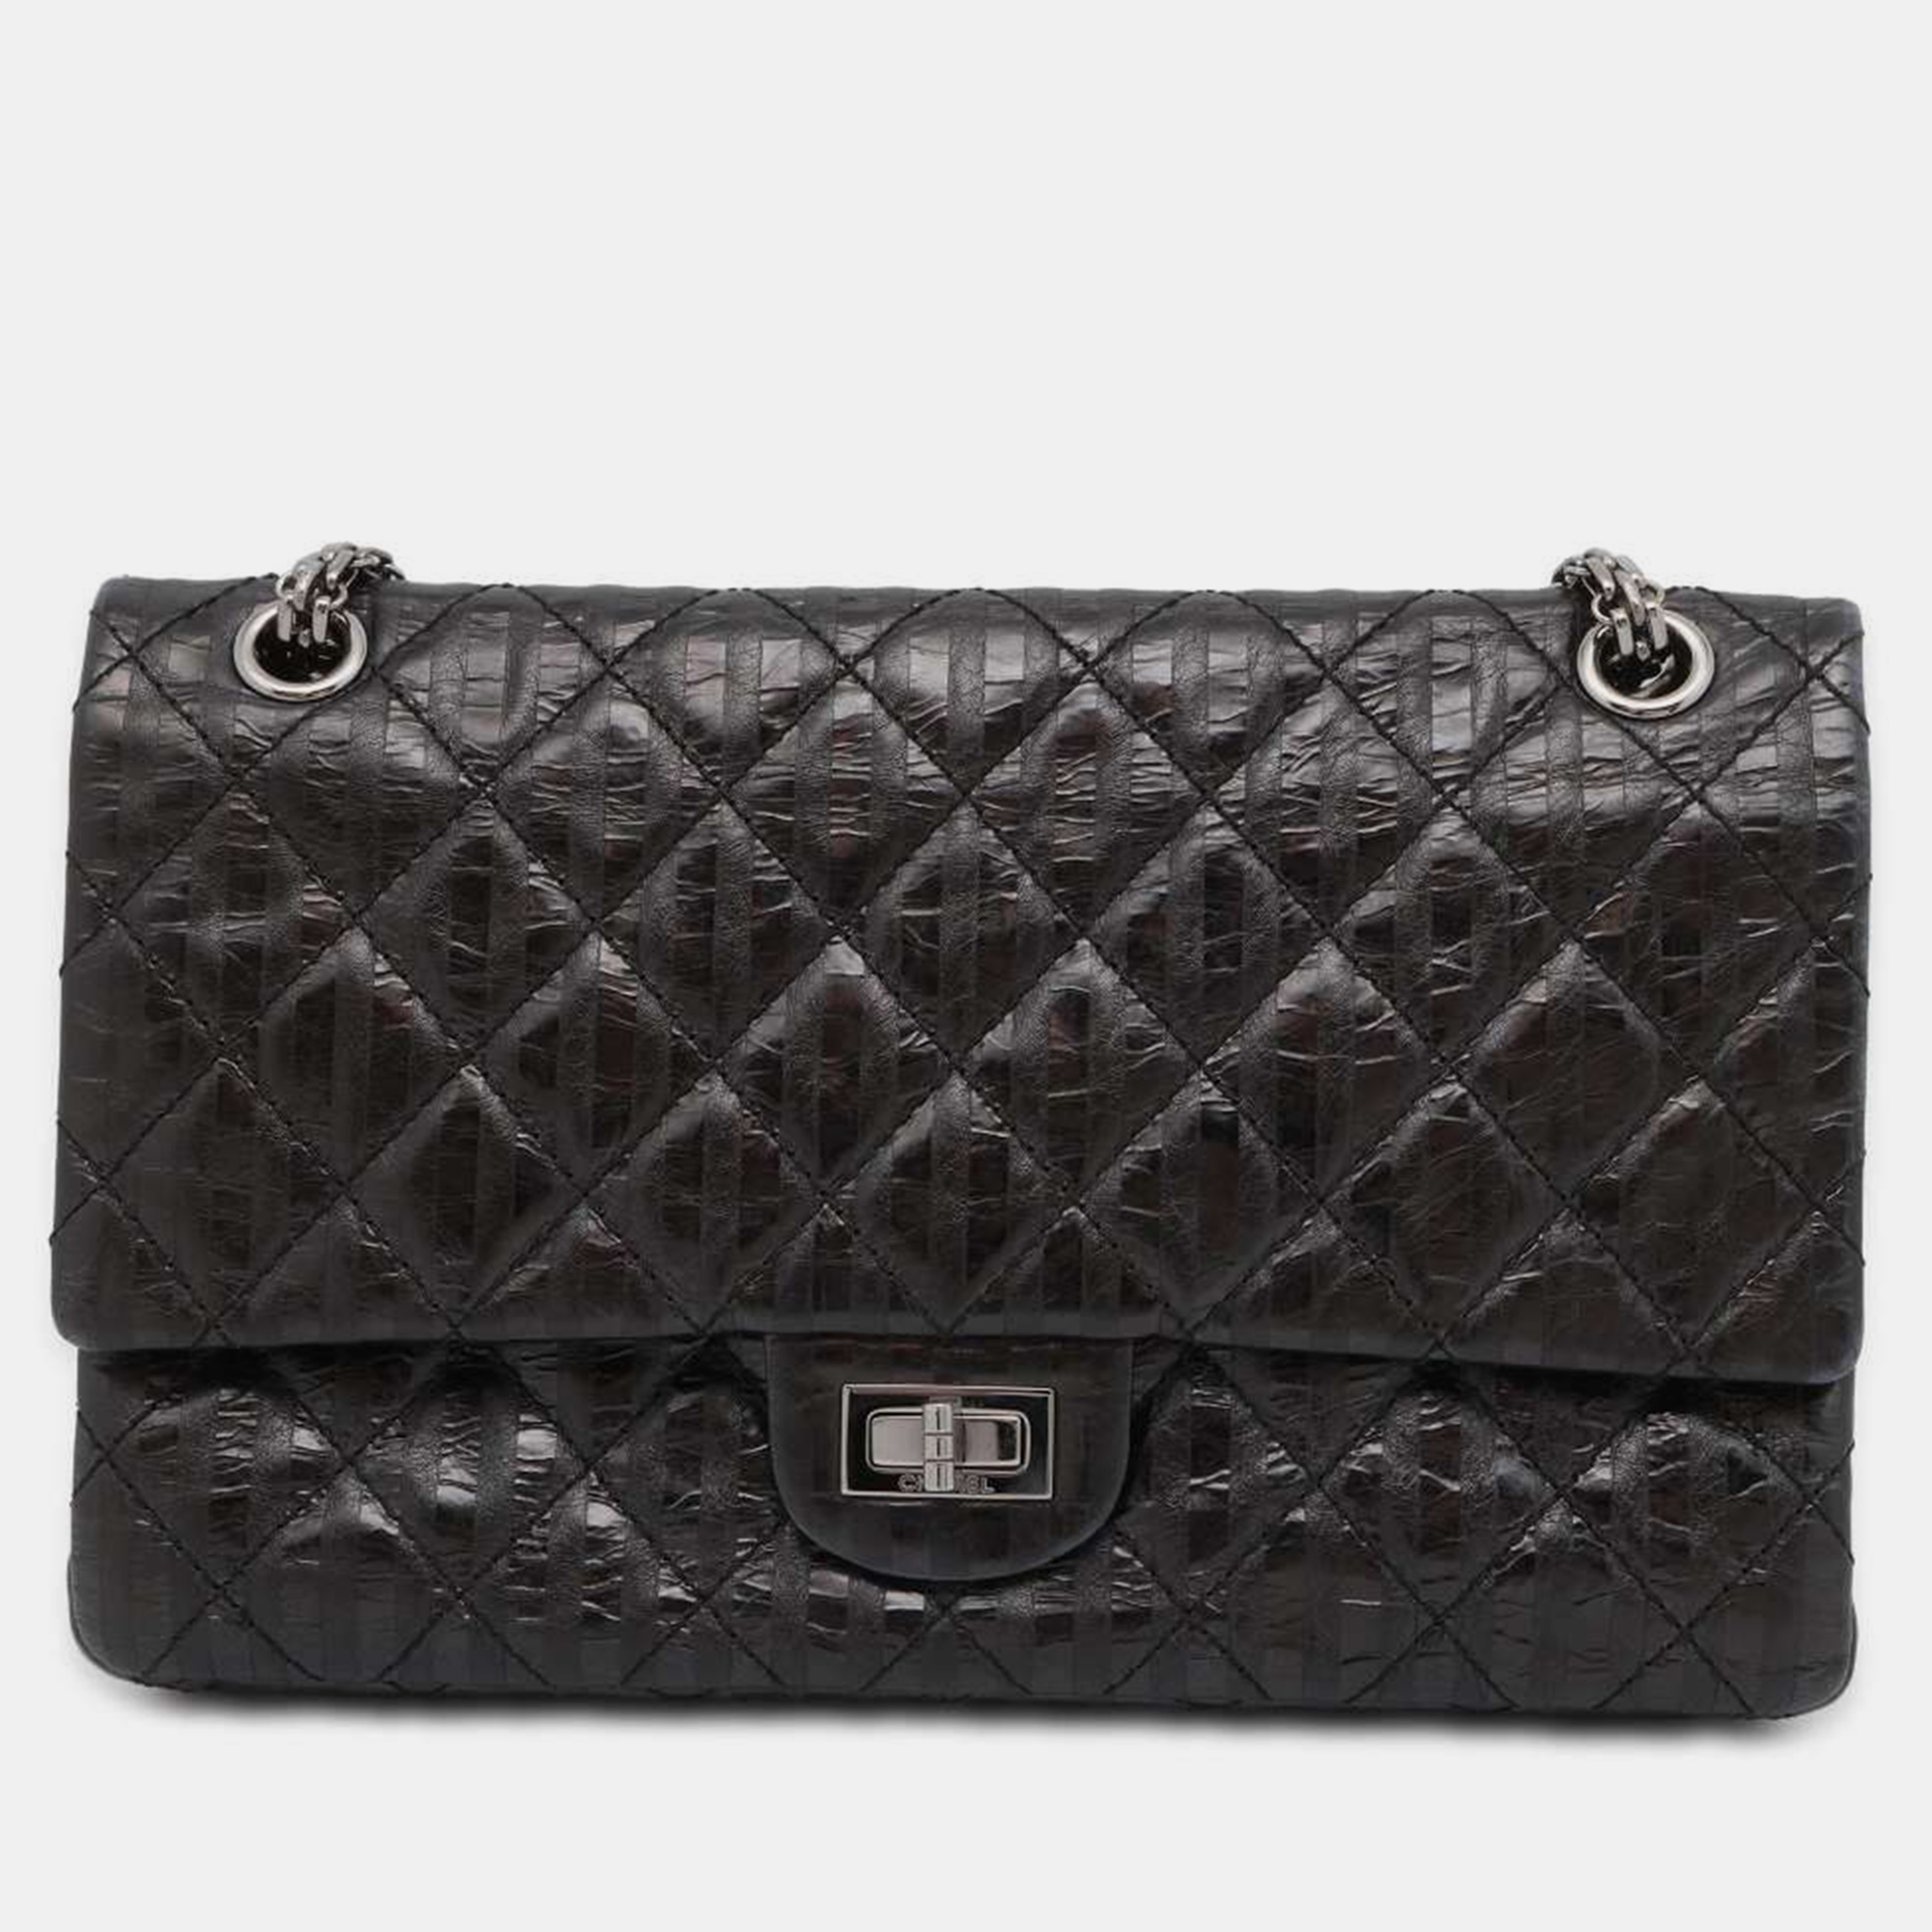 Chanel black leather reissue flap bag